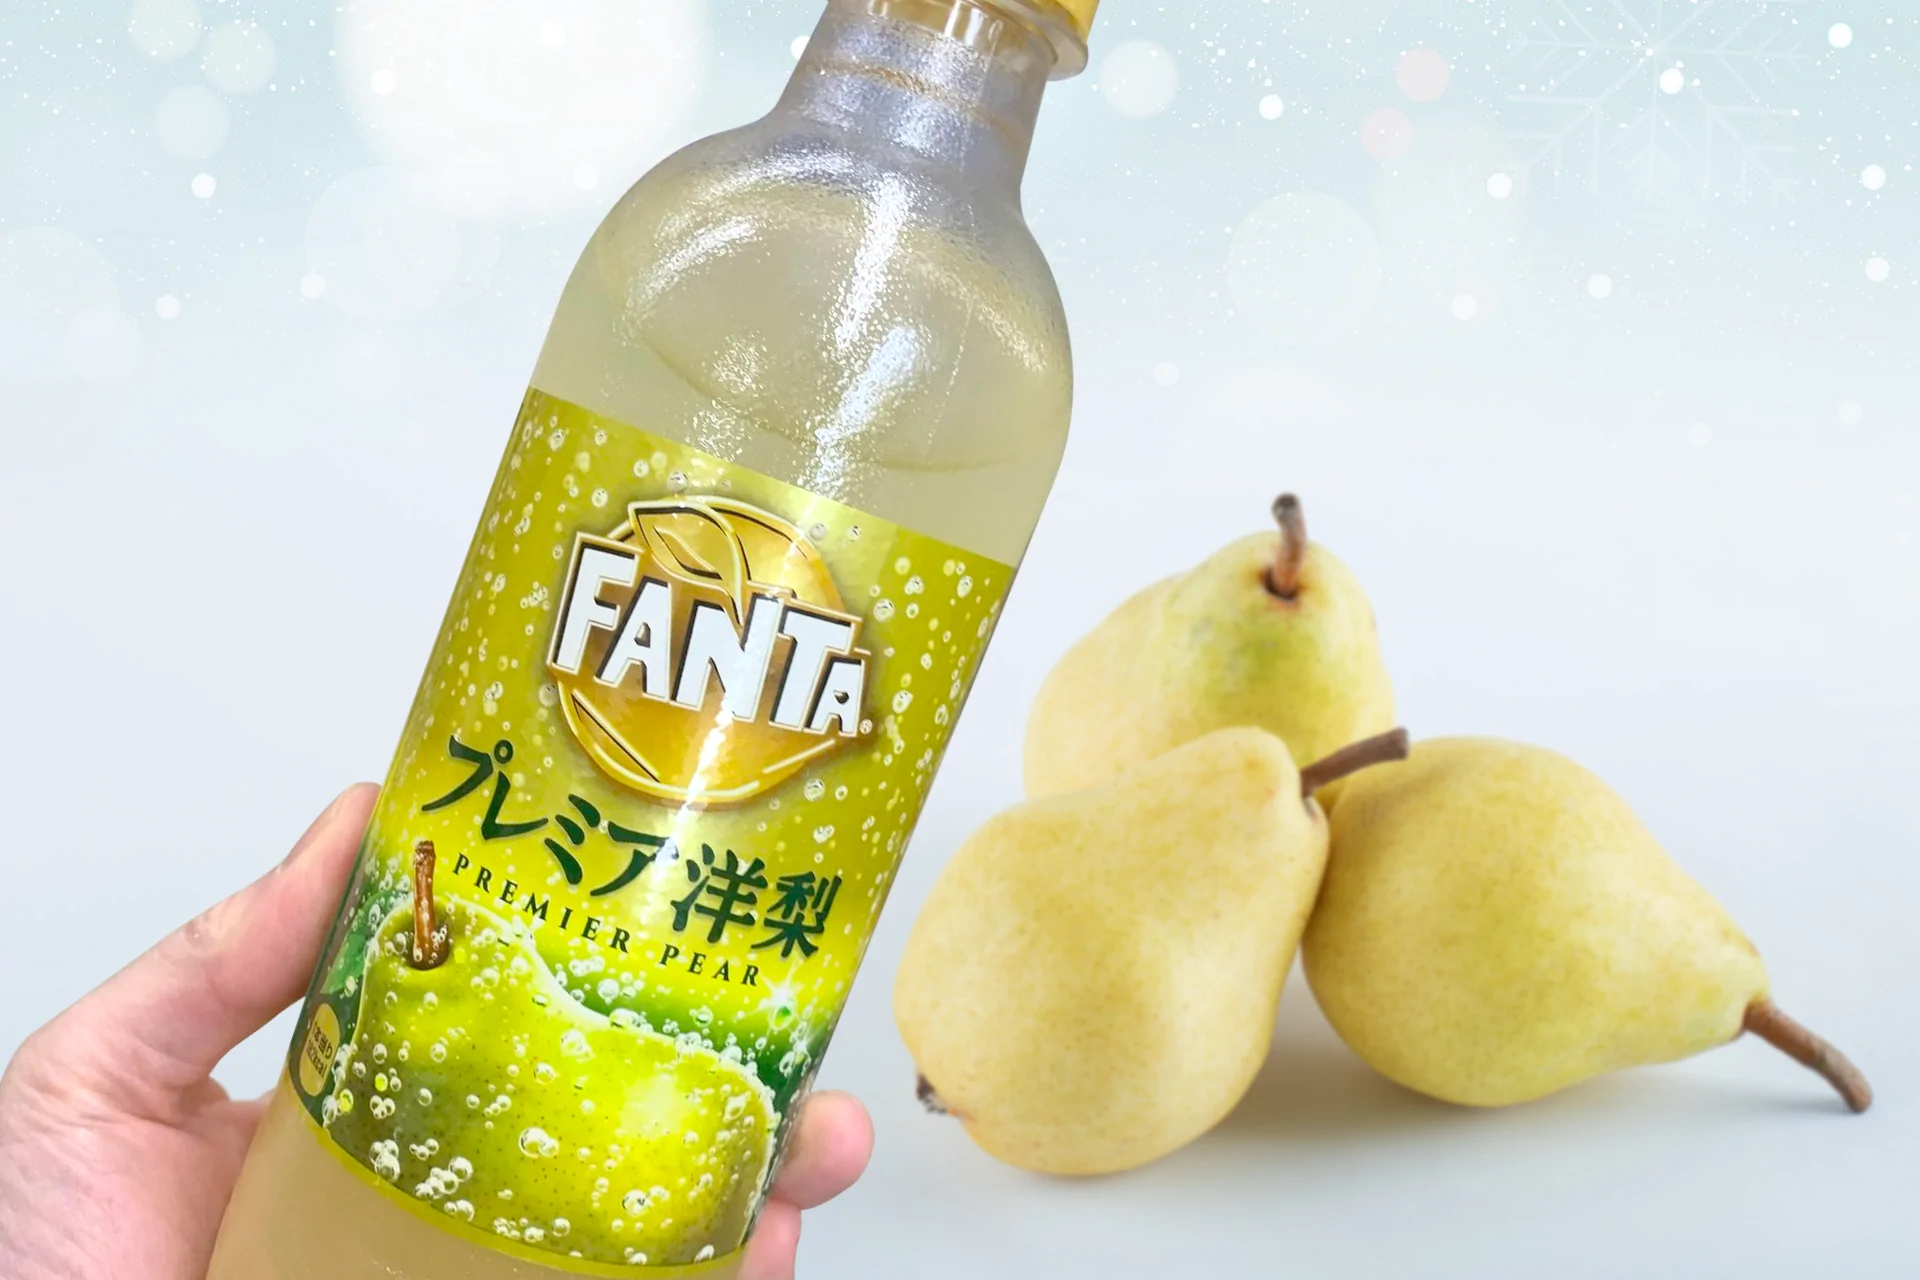  Fanta Japan Premier Pear